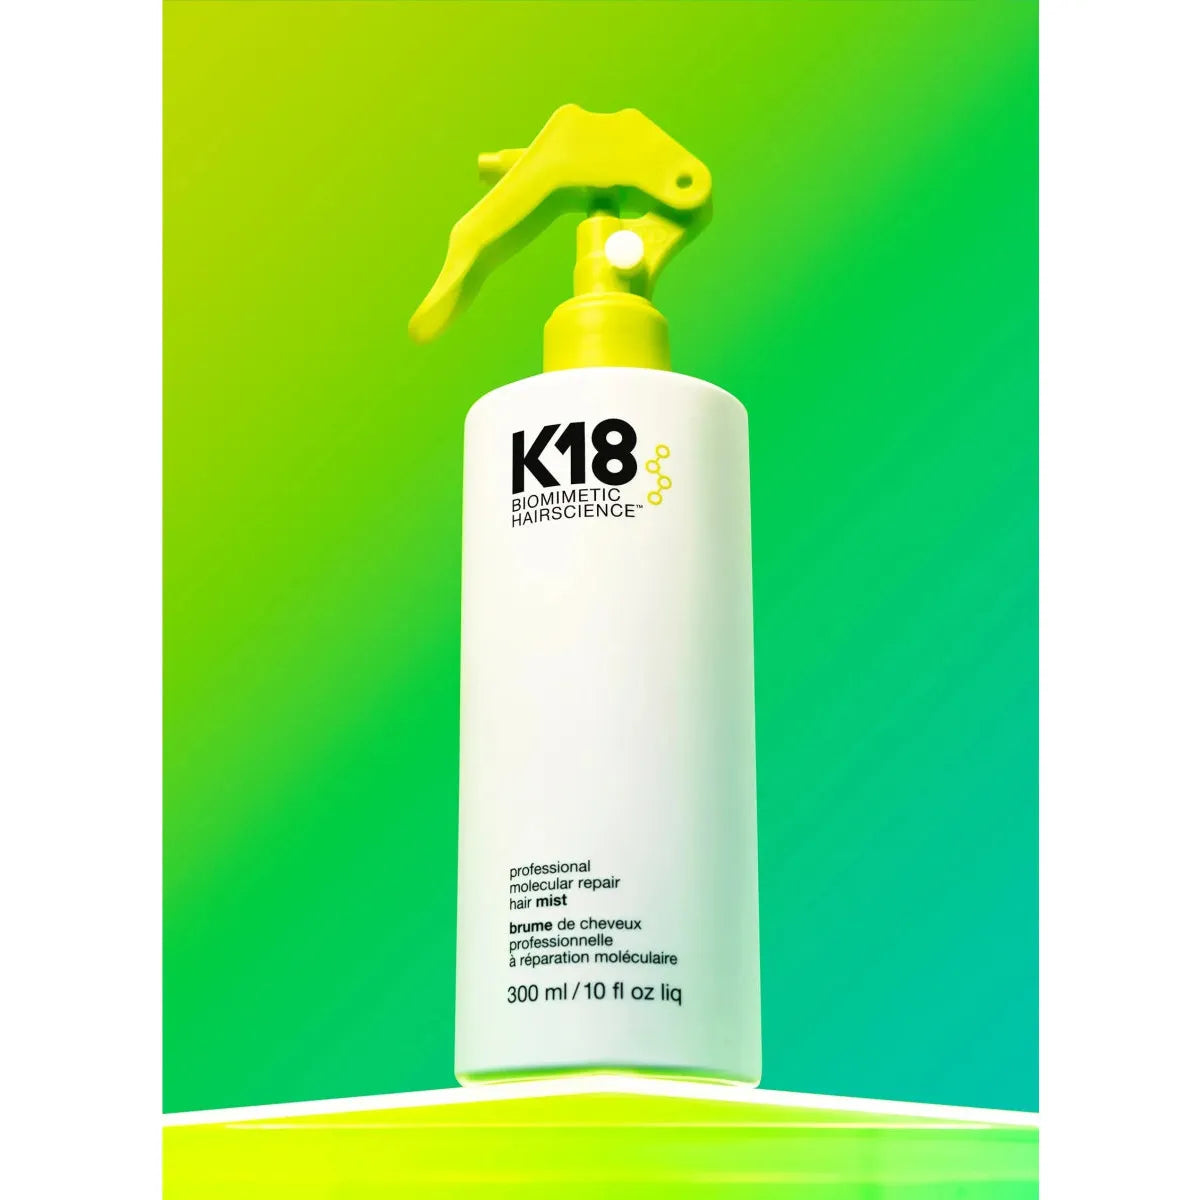 K18 Professional Molecular Repair Hair Mist - 300 ml - DG International Ventures Limited